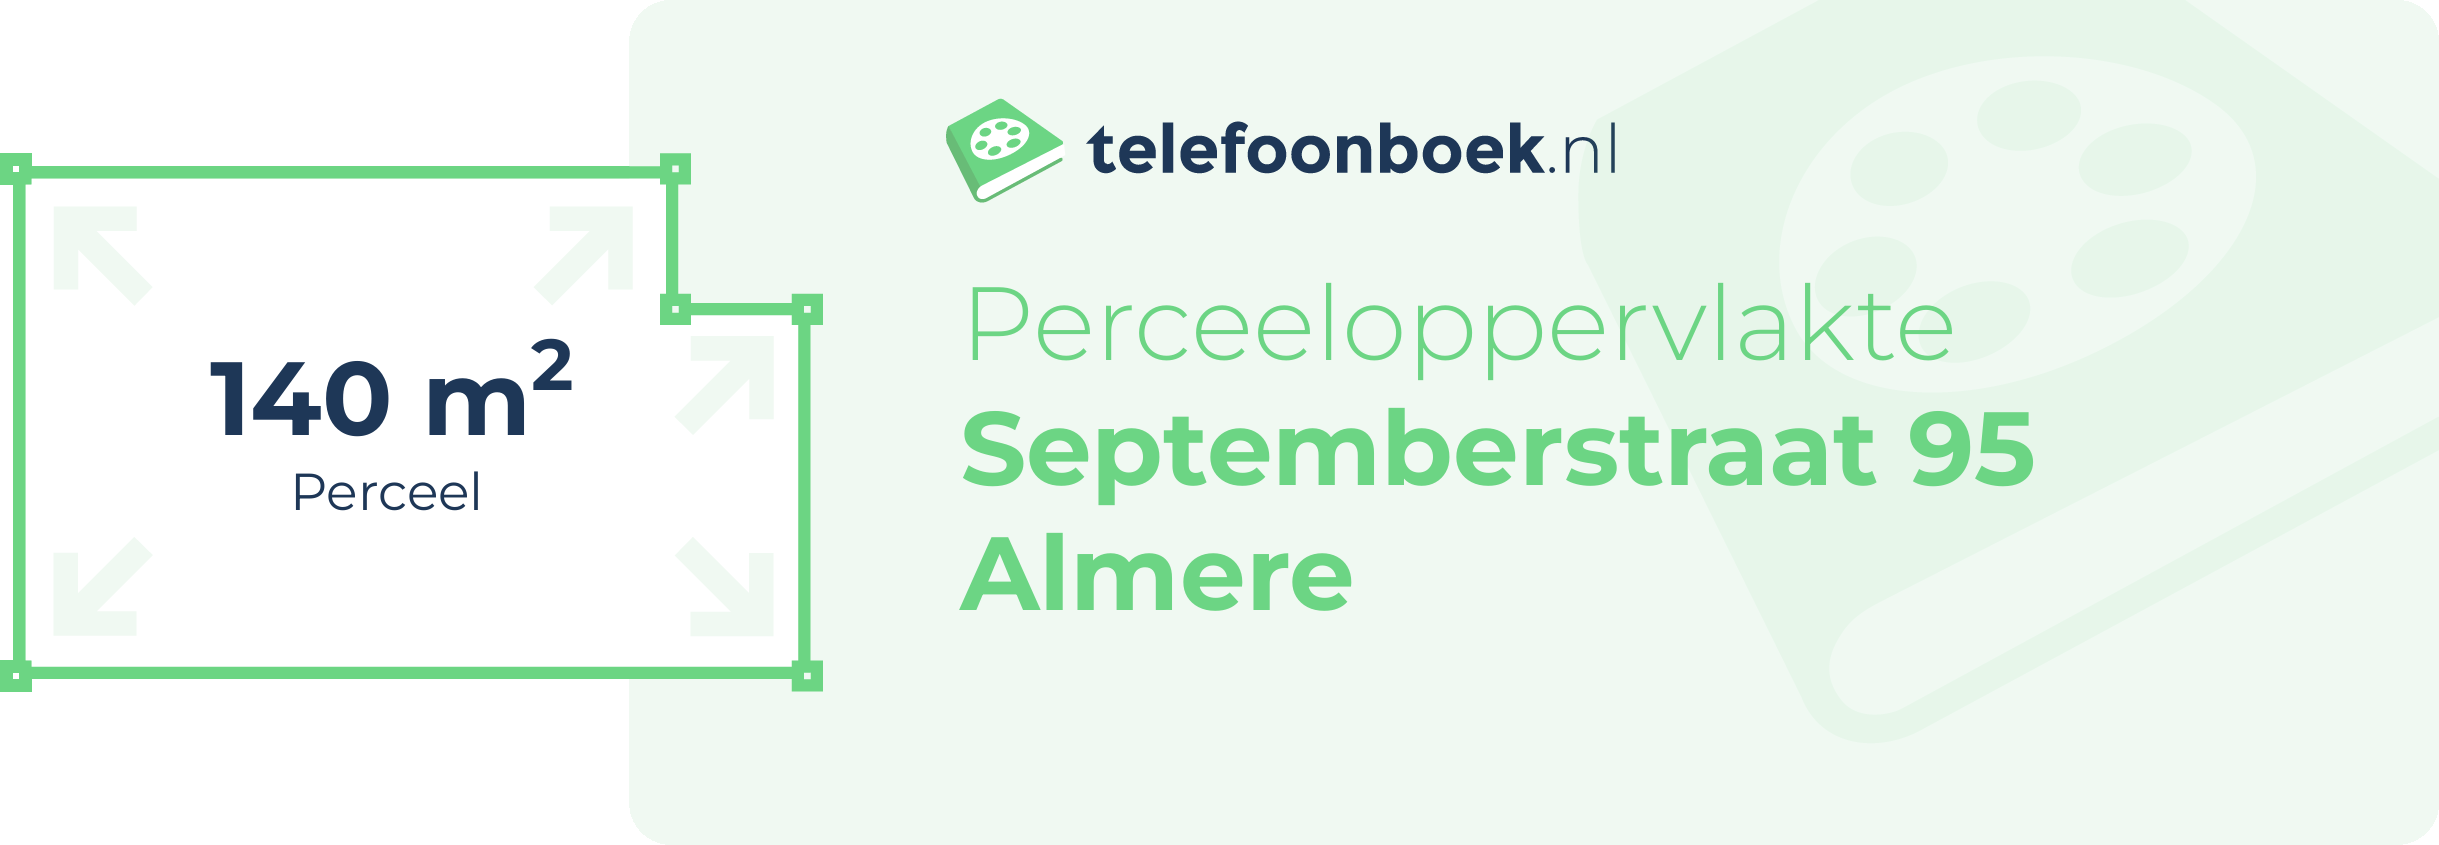 Perceeloppervlakte Septemberstraat 95 Almere